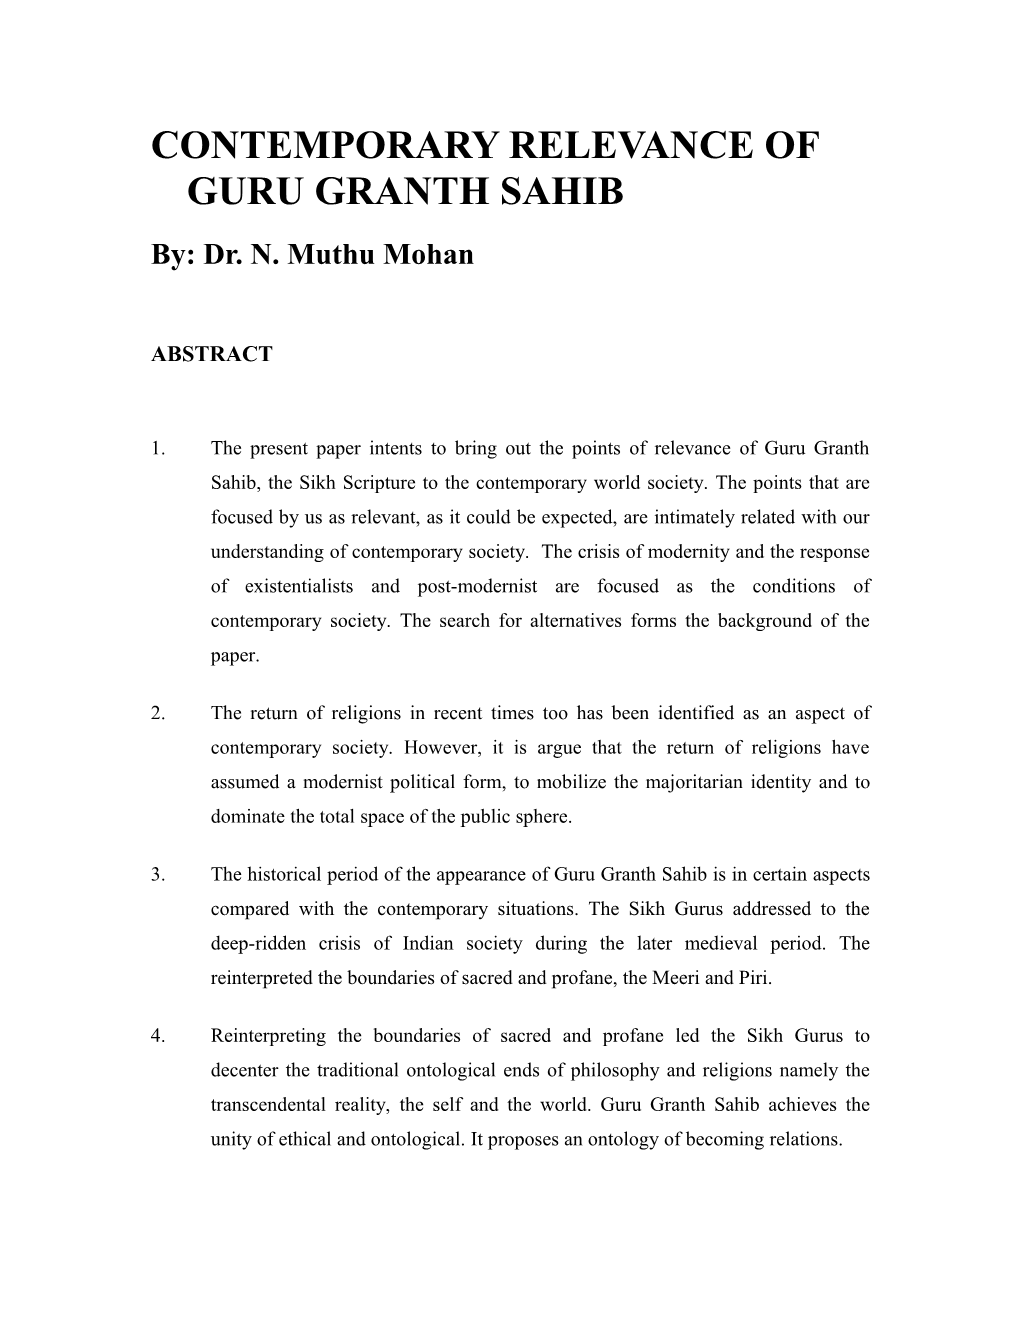 Contemporary Relevance of Guru Granth Sahib